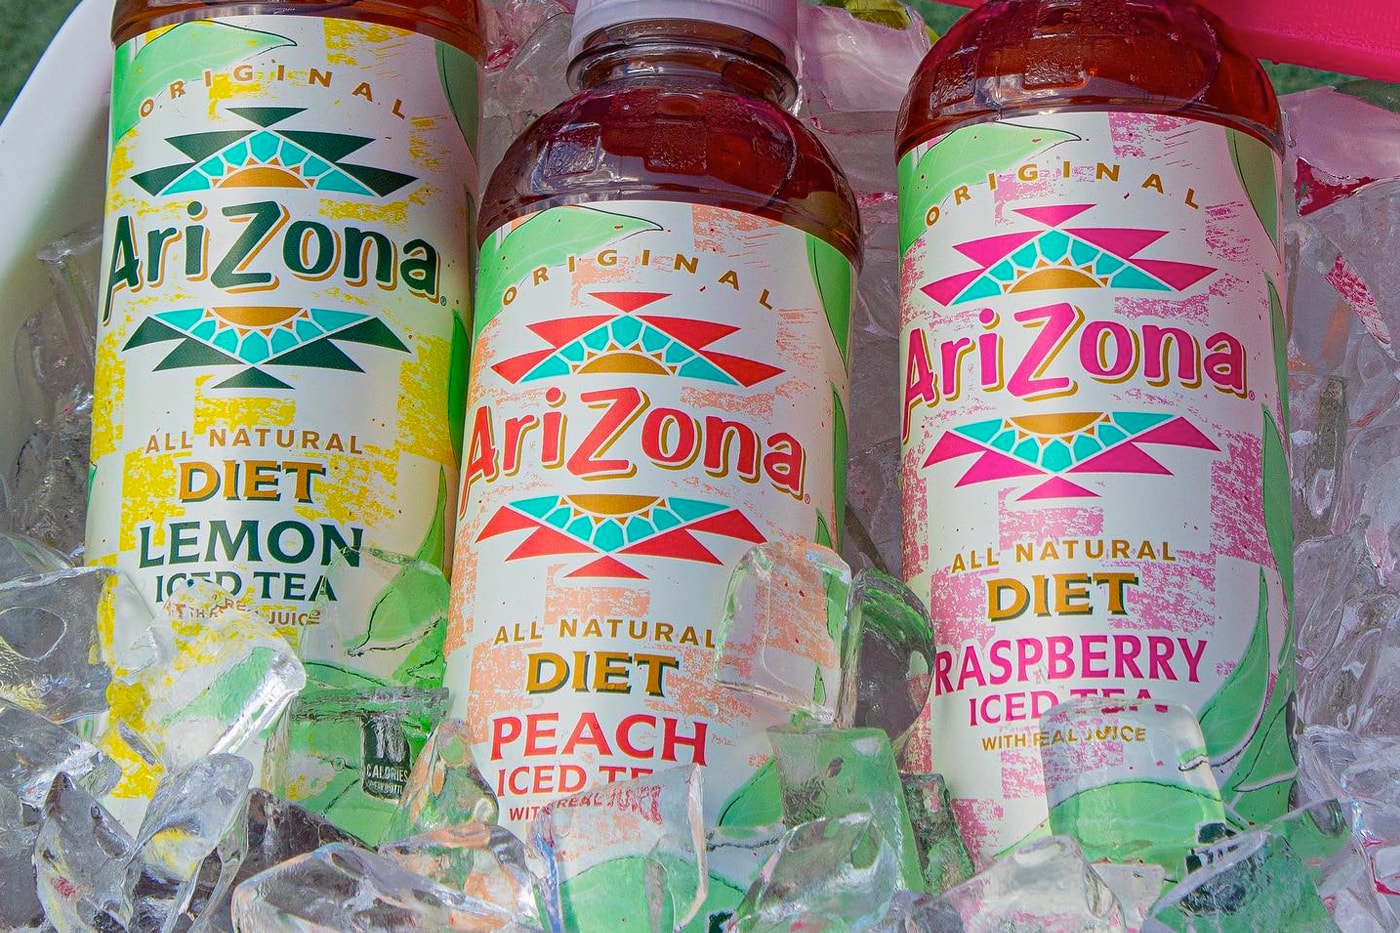 AriZona Iced Tea Founder Cans Stay $0.99 Cents USD Info